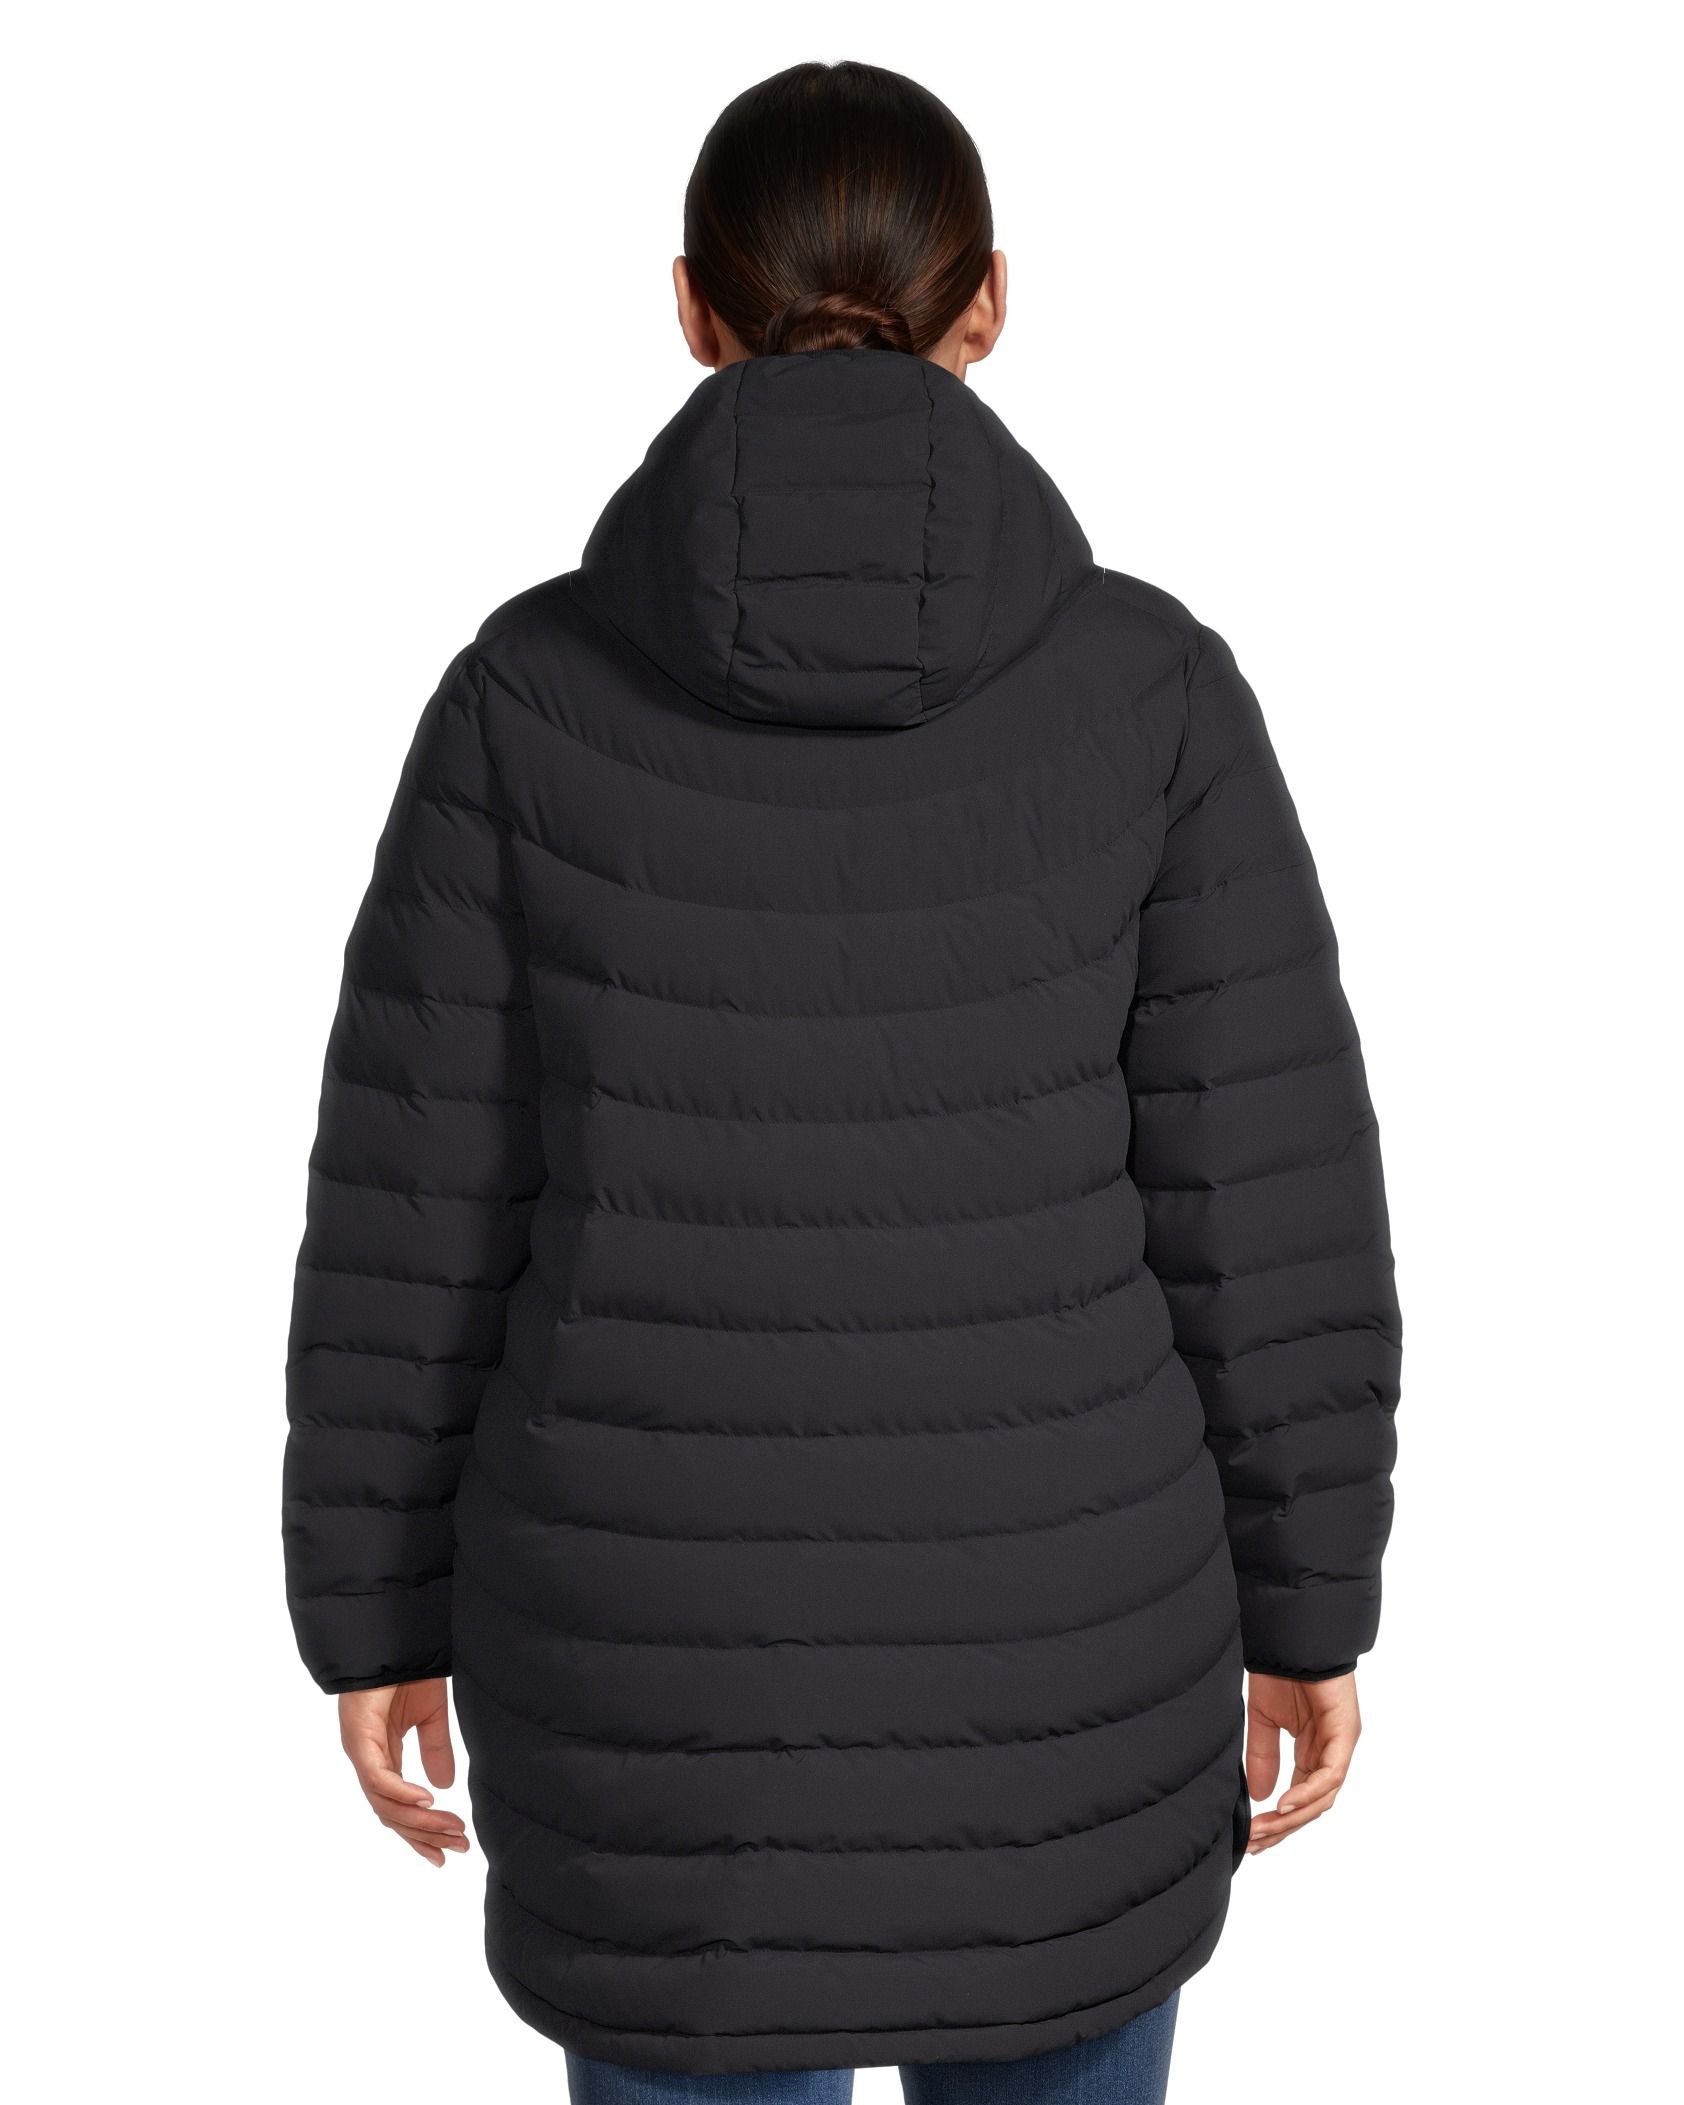 FeatherLite Women's Micro Fleece Full-Zip Jacket XL Onyx Black at   Women's Coats Shop